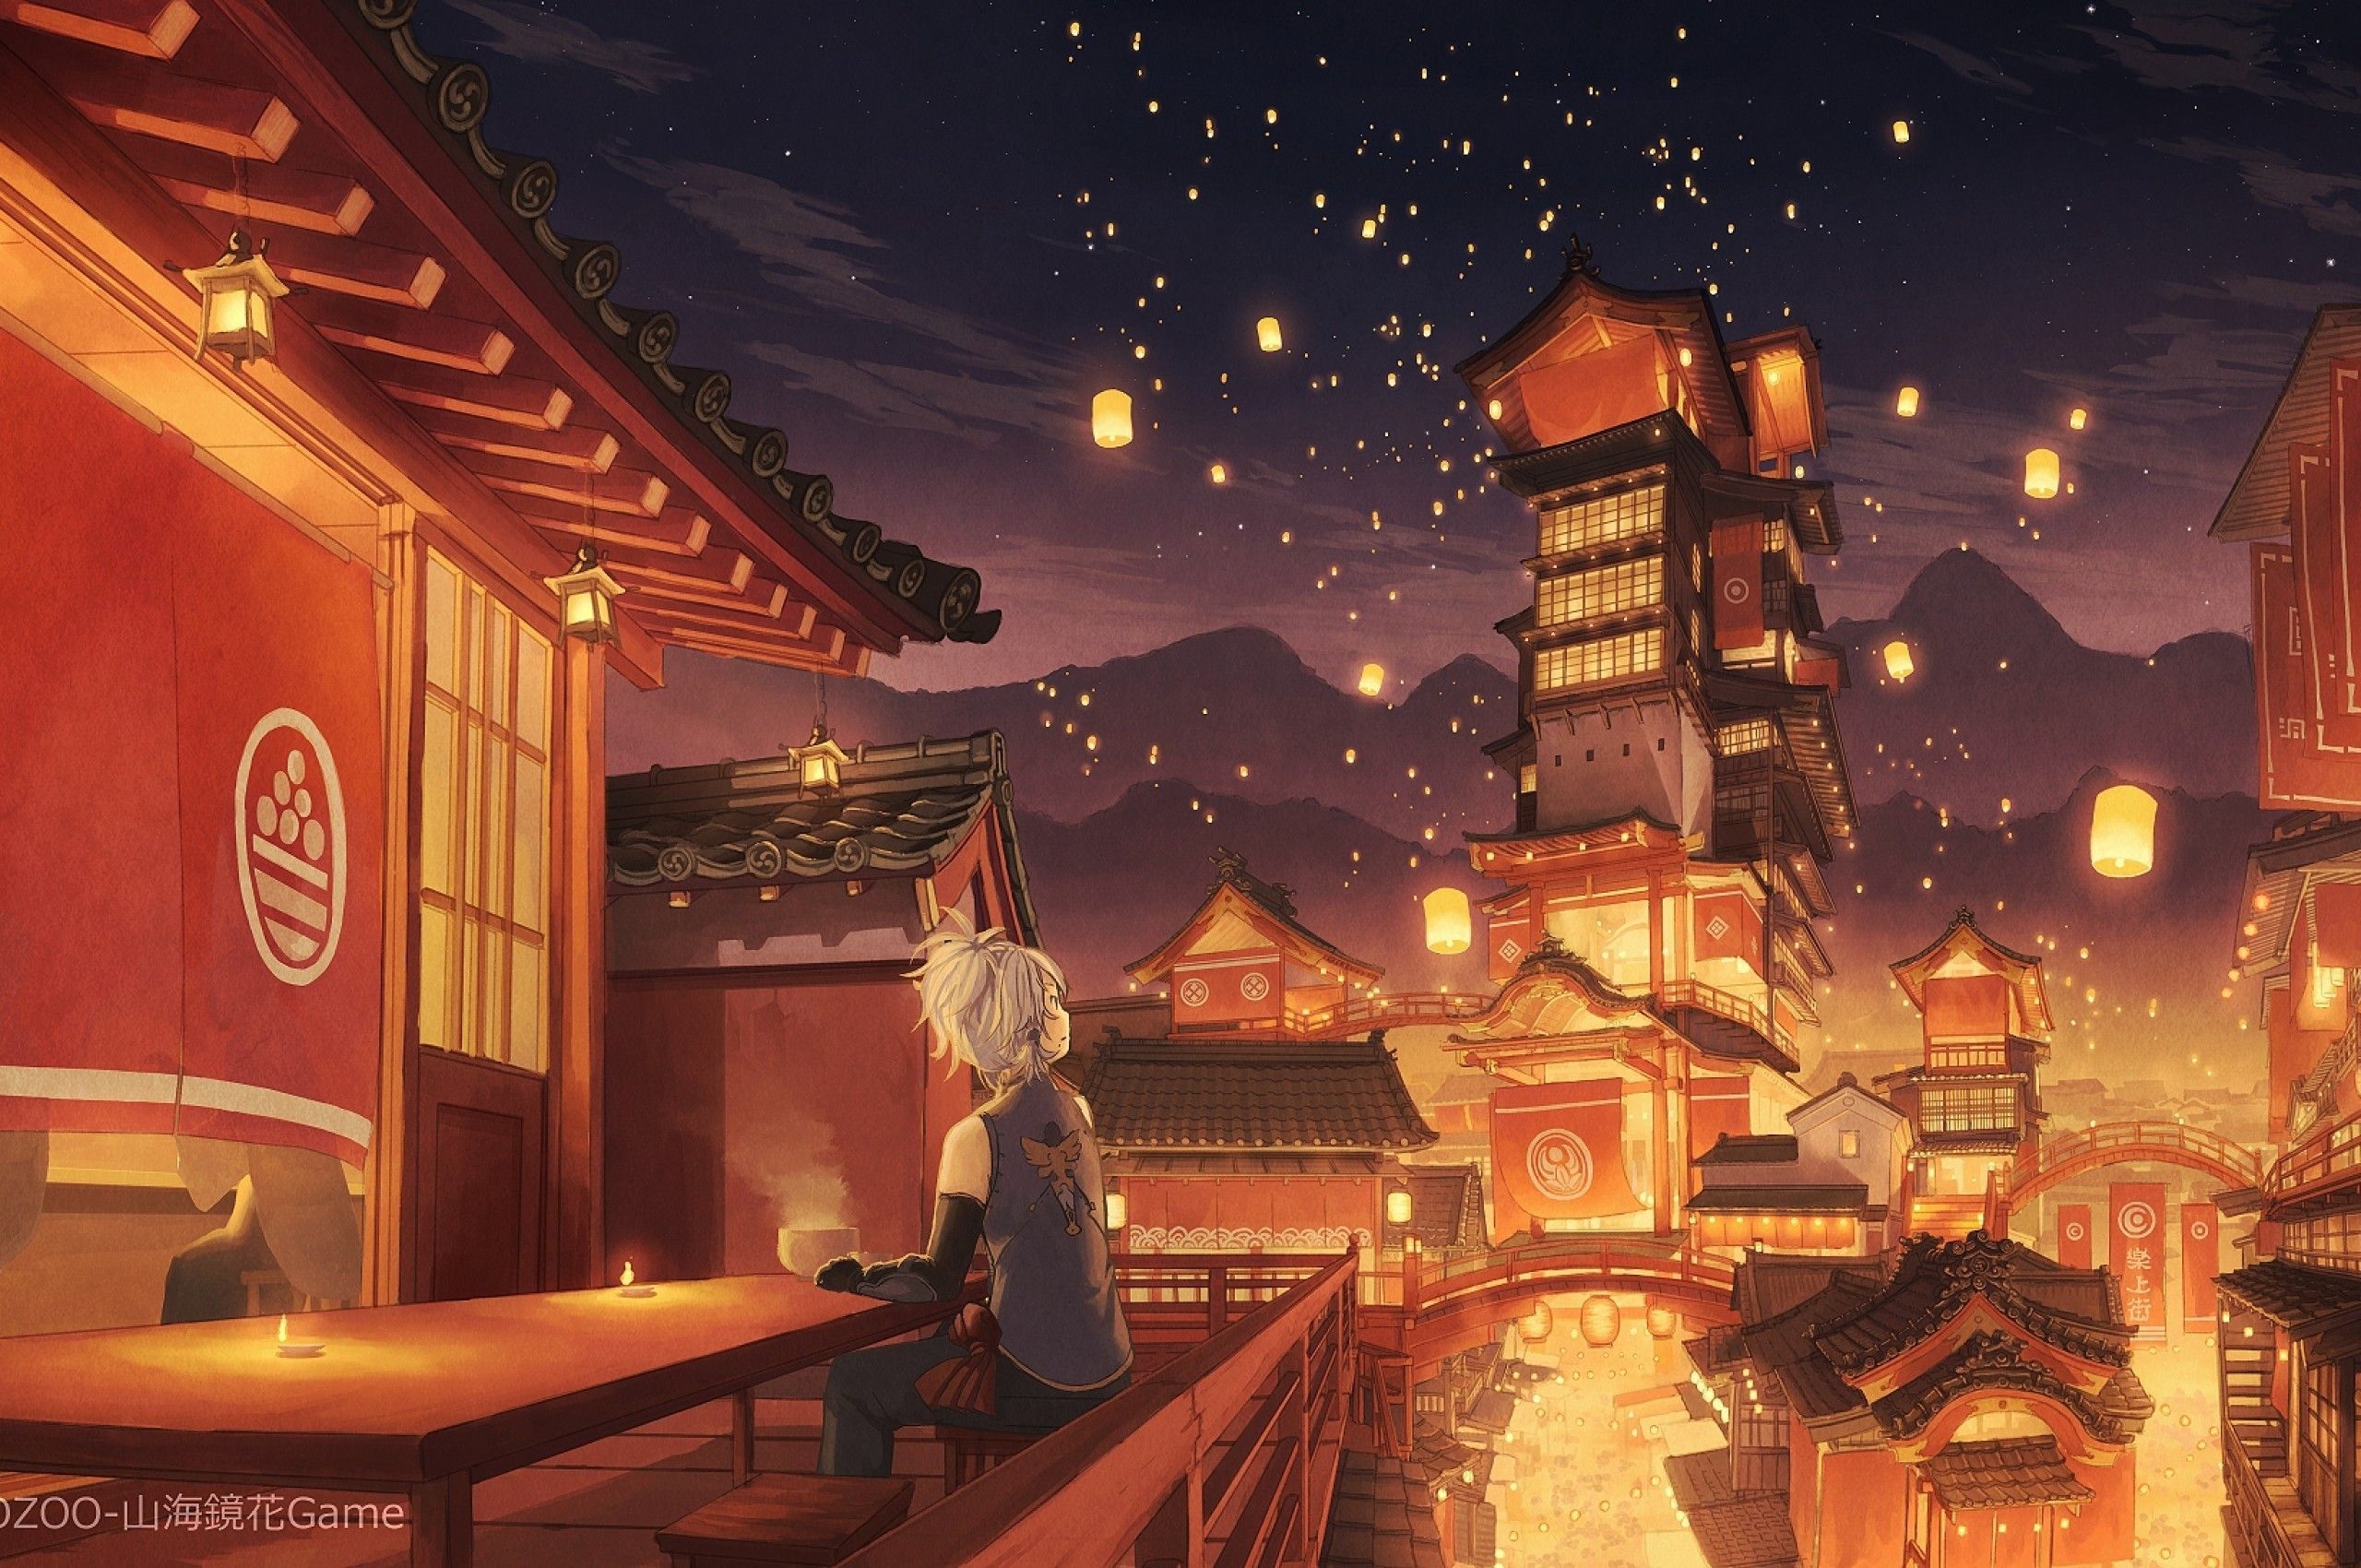 anime japanese lantern festival scenery, Anime background, Scenery